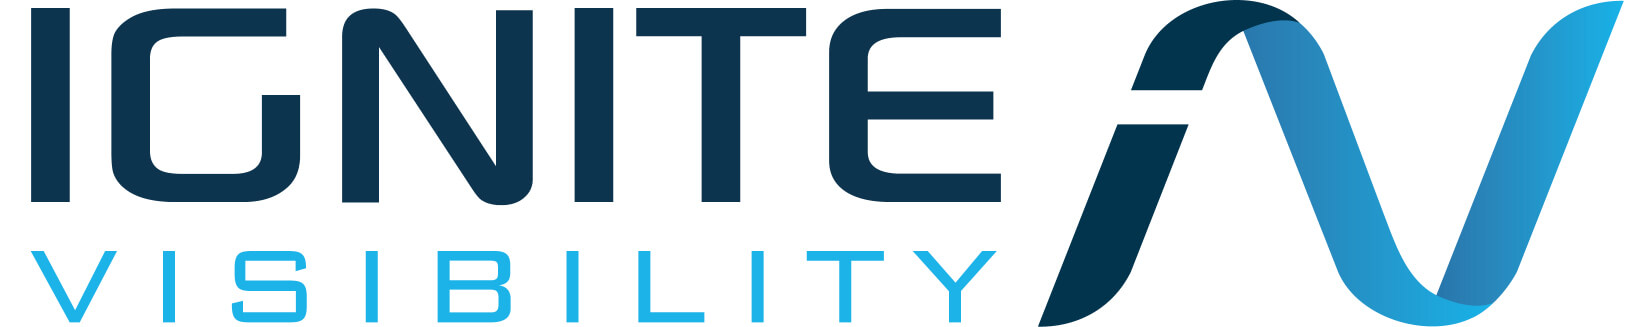 Best Real Estate SEO Company Logo: Ignite Visibility